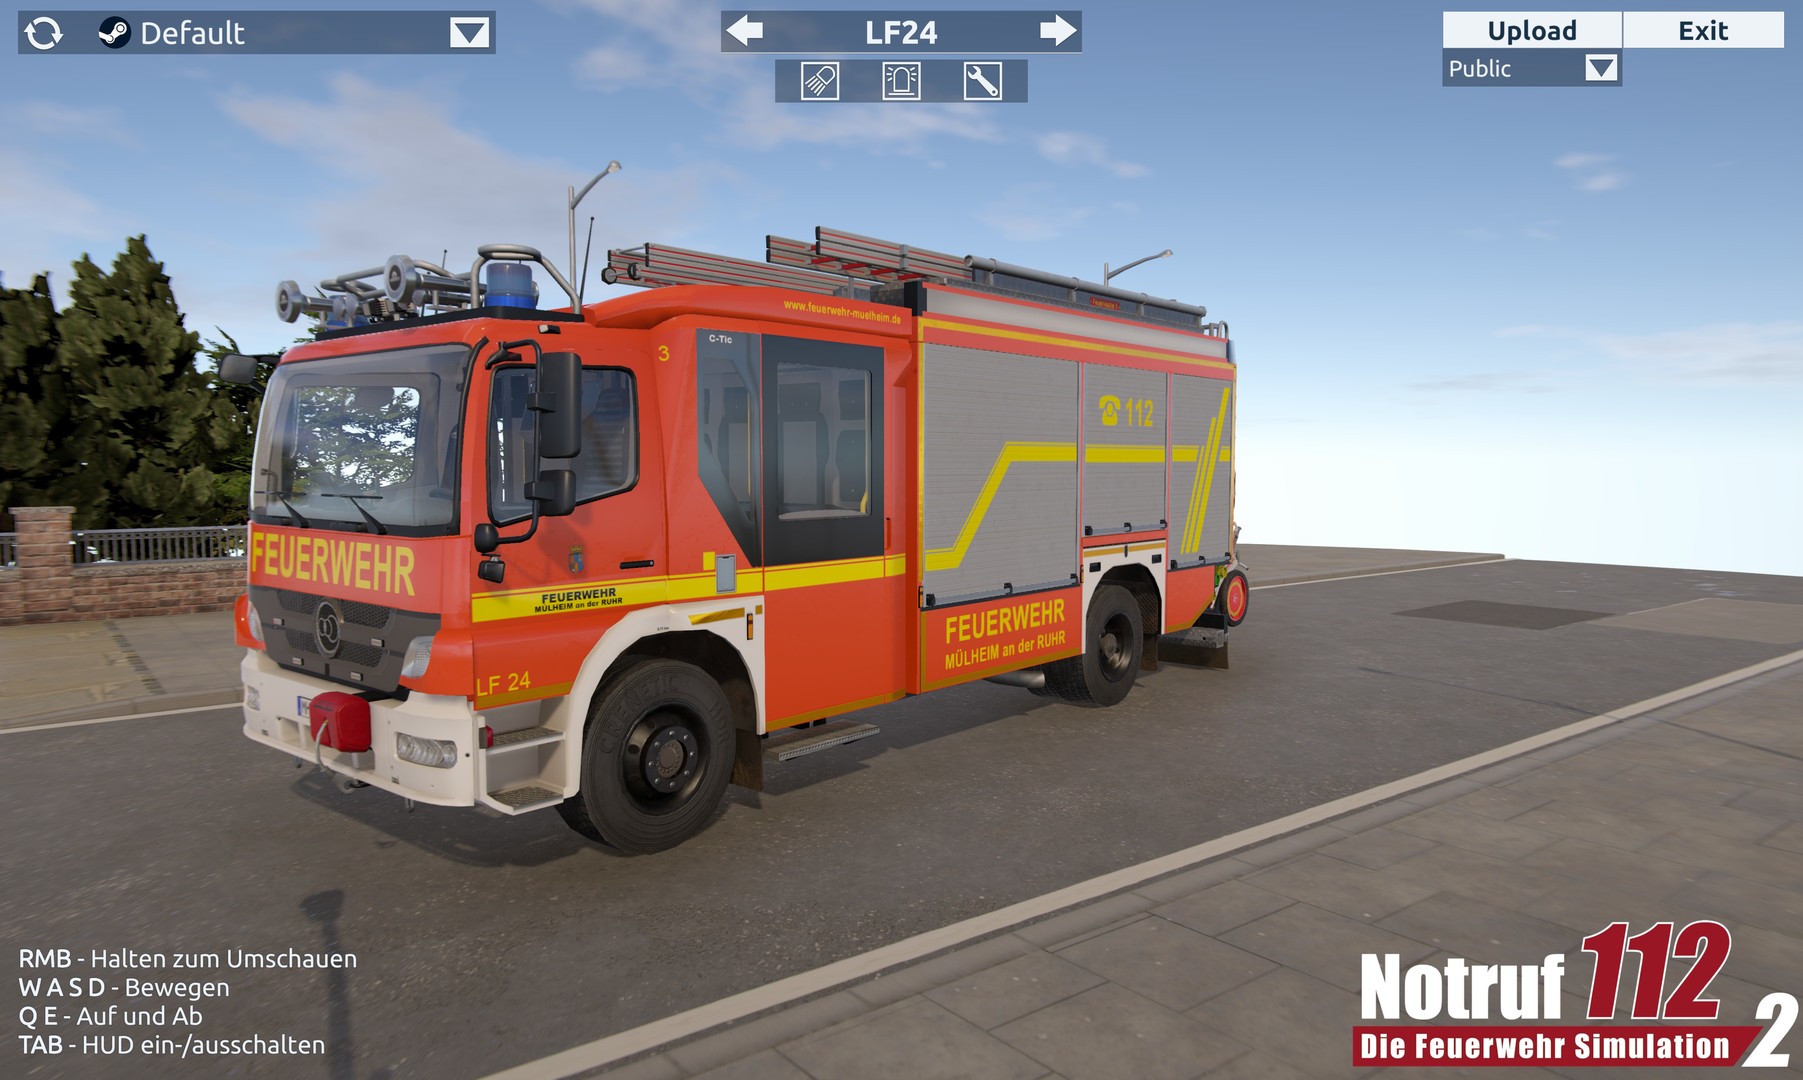 Notruf 112 - Die Feuerwehr Simulation 2: Showroom game revenue and stats on  Steam – Steam Marketing Tool